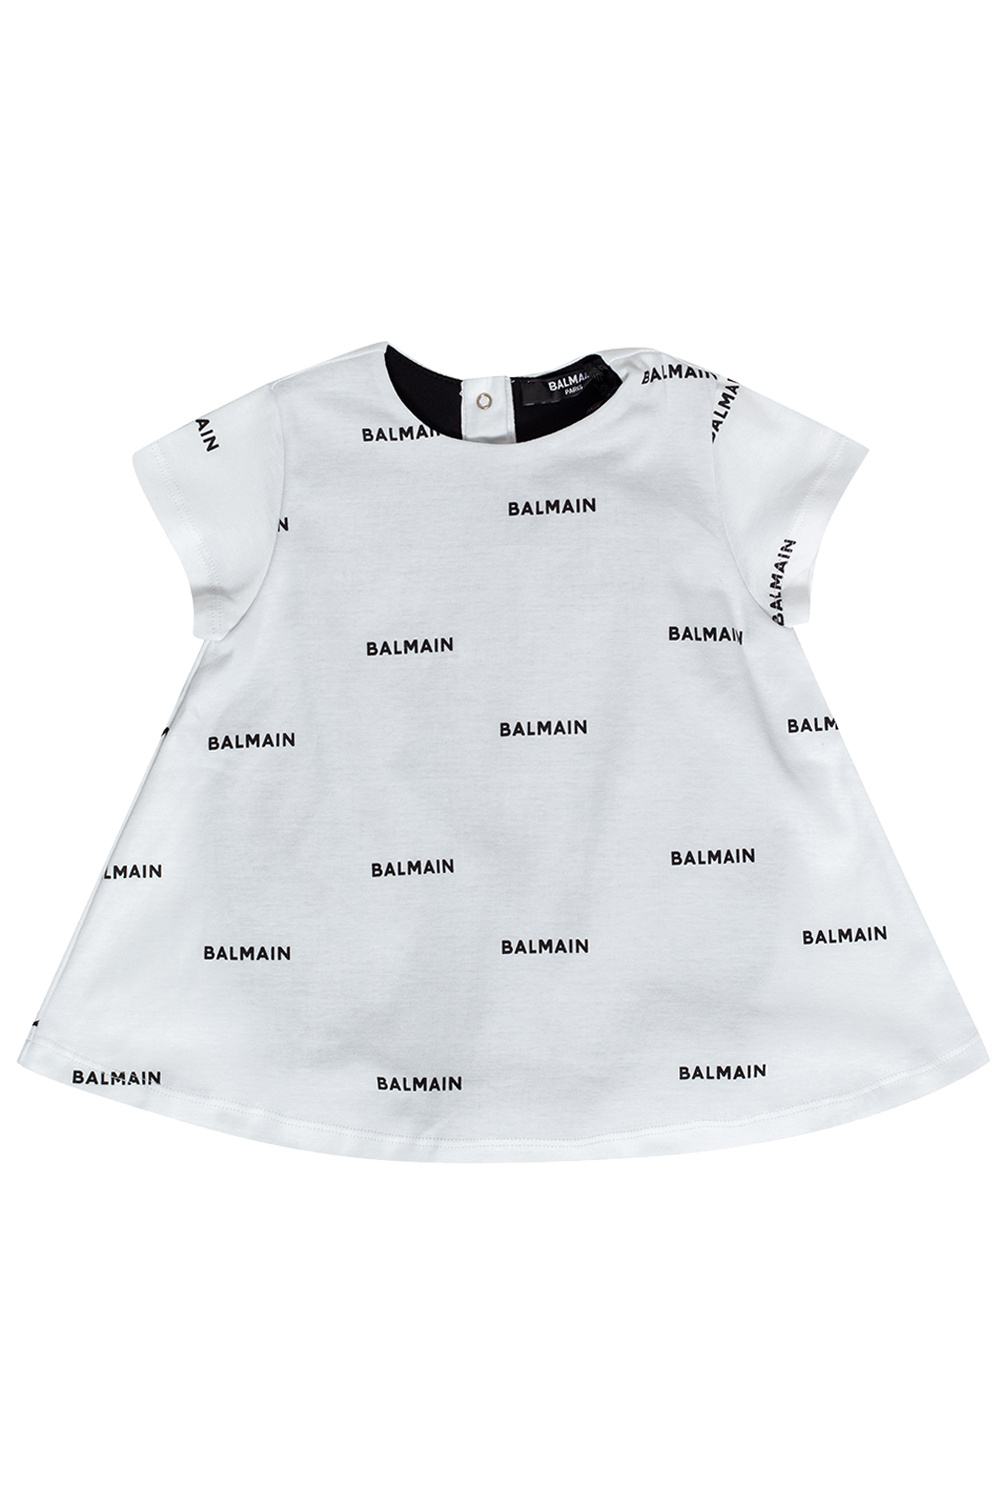 Balmain Kids Maxi Balmain Back T-shirt Bulky Fit